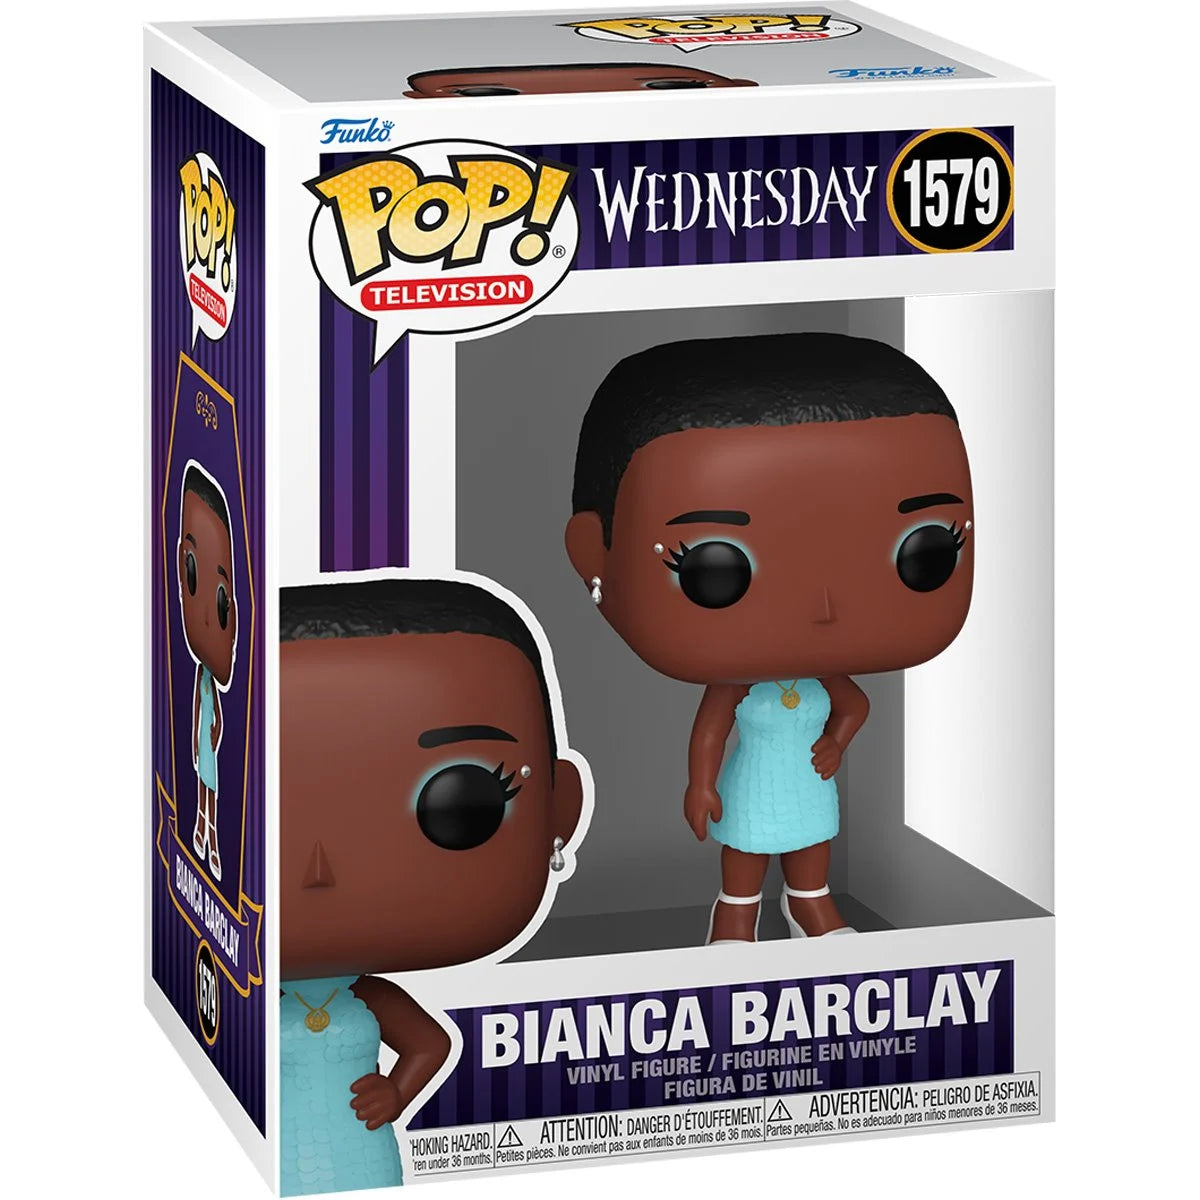 Wednesday Rave'n Dance Bianca Barclay (Pre-Order!)